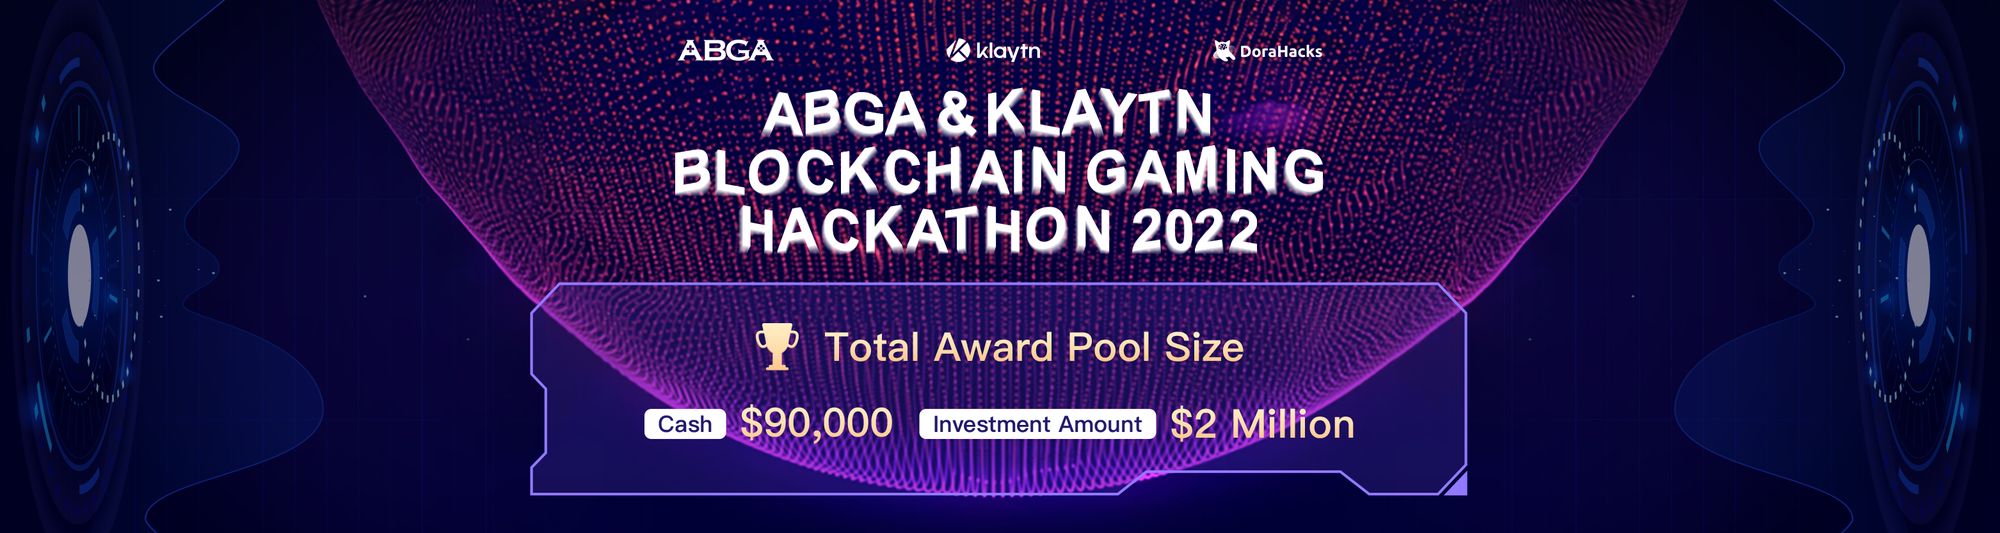 ABGA & KLAYTN Blockchain Gaming Hackathon Application Guide